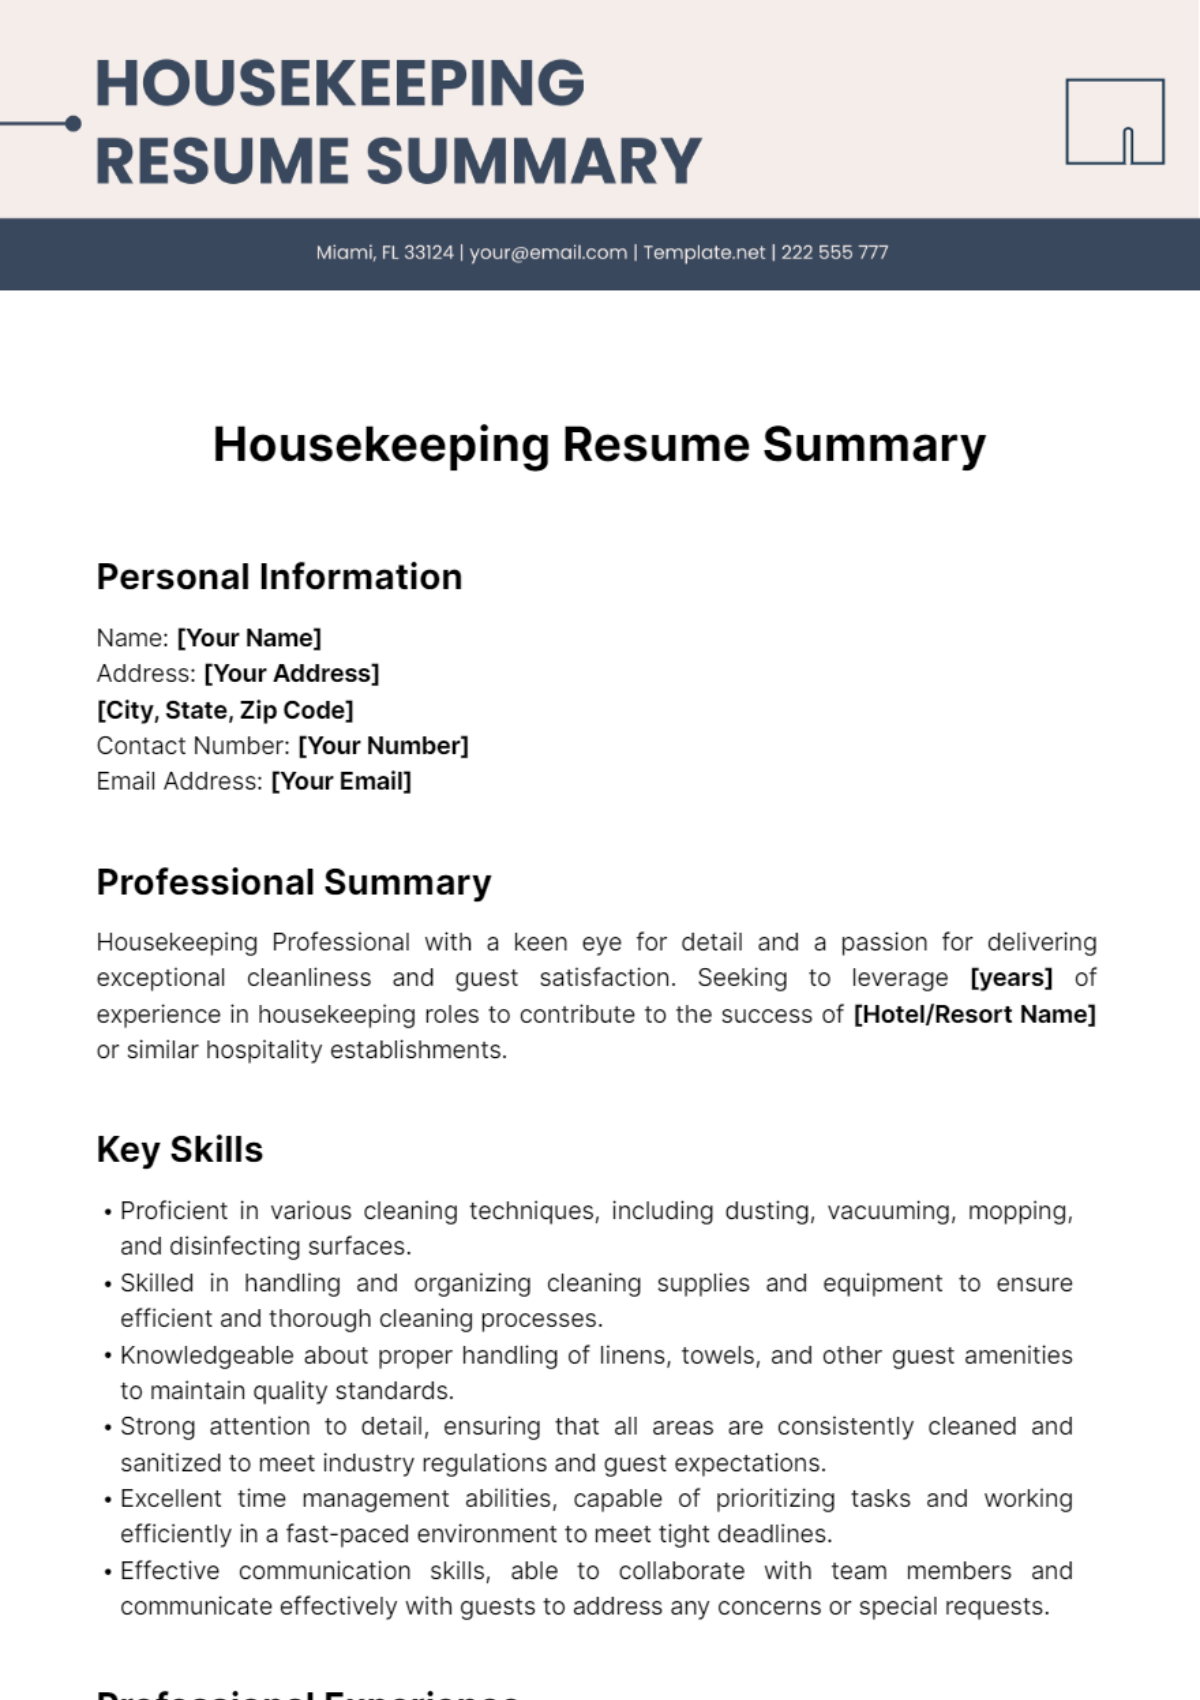 Housekeeping Resume Summary Template